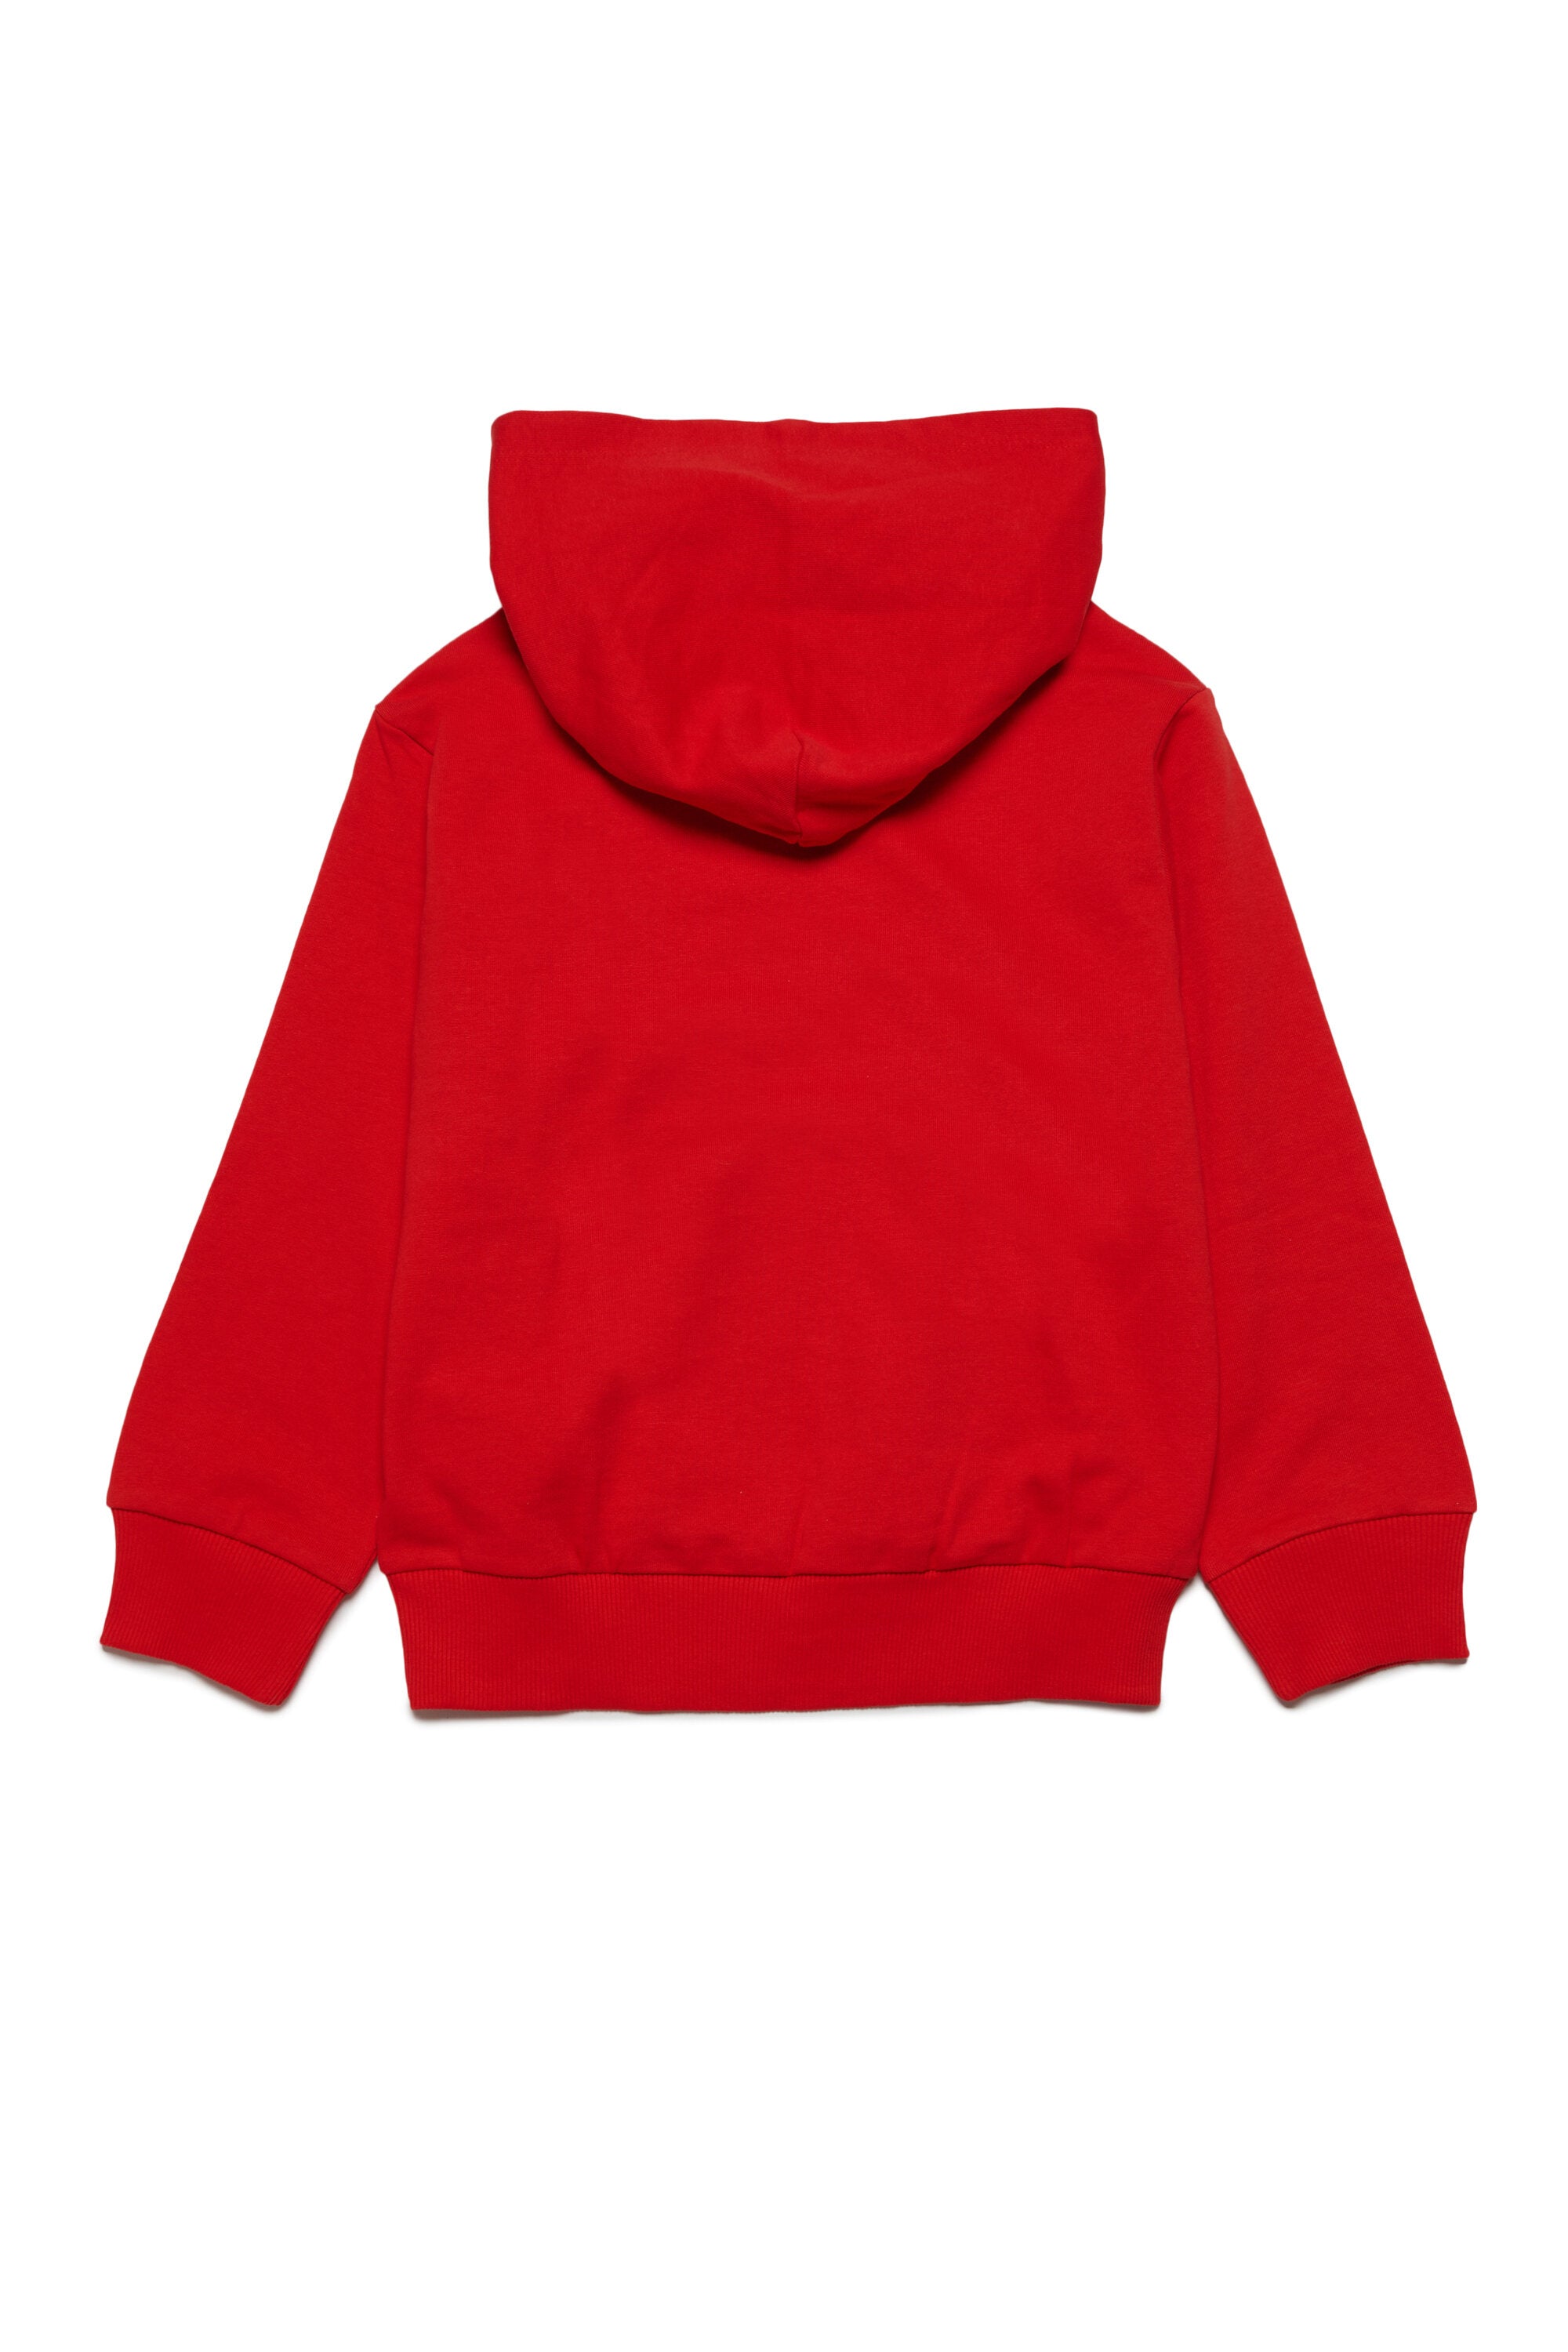 Boy's hooded sweatshirt with Diesel Denim Division logo | BRAVE KID